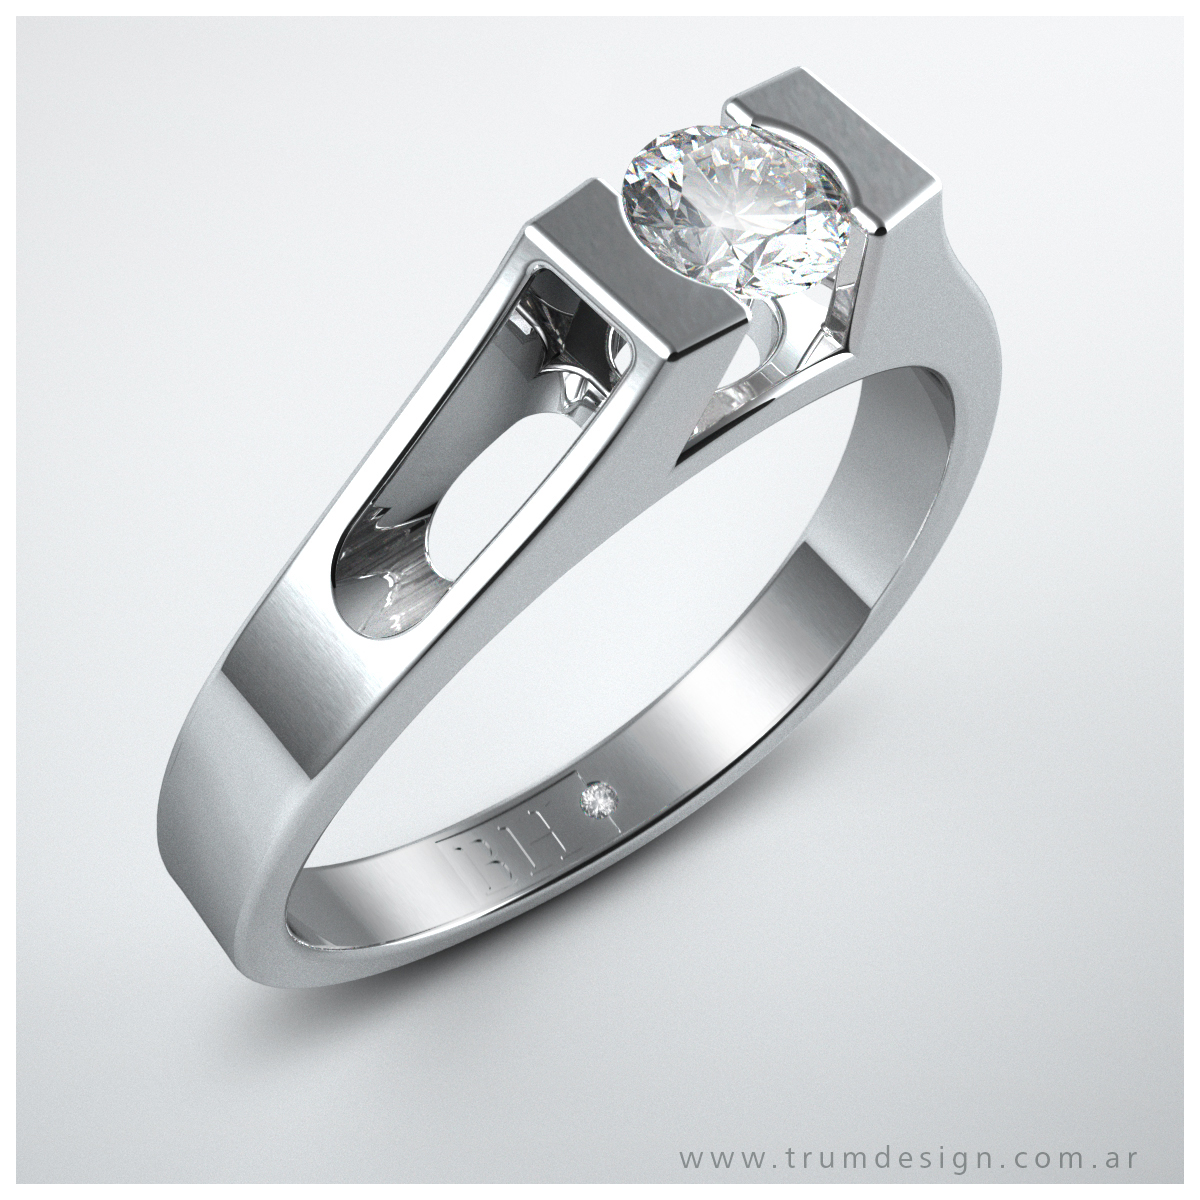 Jewellery rings 3D modeling Maxwell vray Rhinoceros Rhino modo t-splines jewelry organic modeling Organic Design